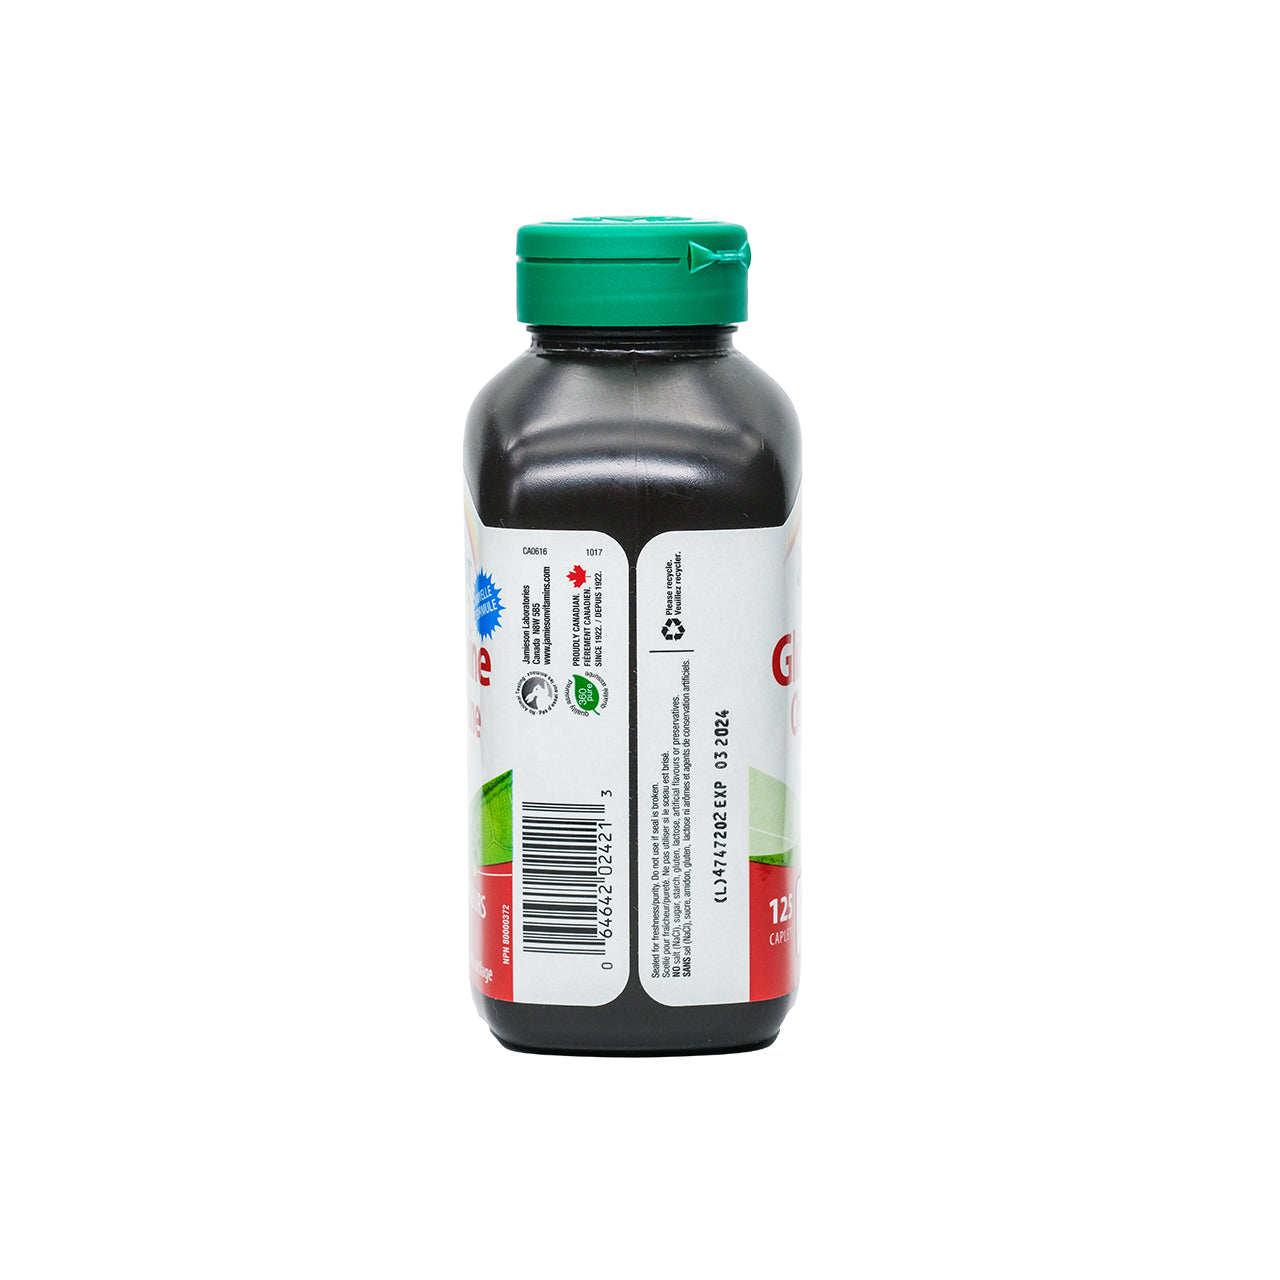 Parallel Import Jamieson Glucosamine 500mg + Chondroitin 400mg 125 Capsules